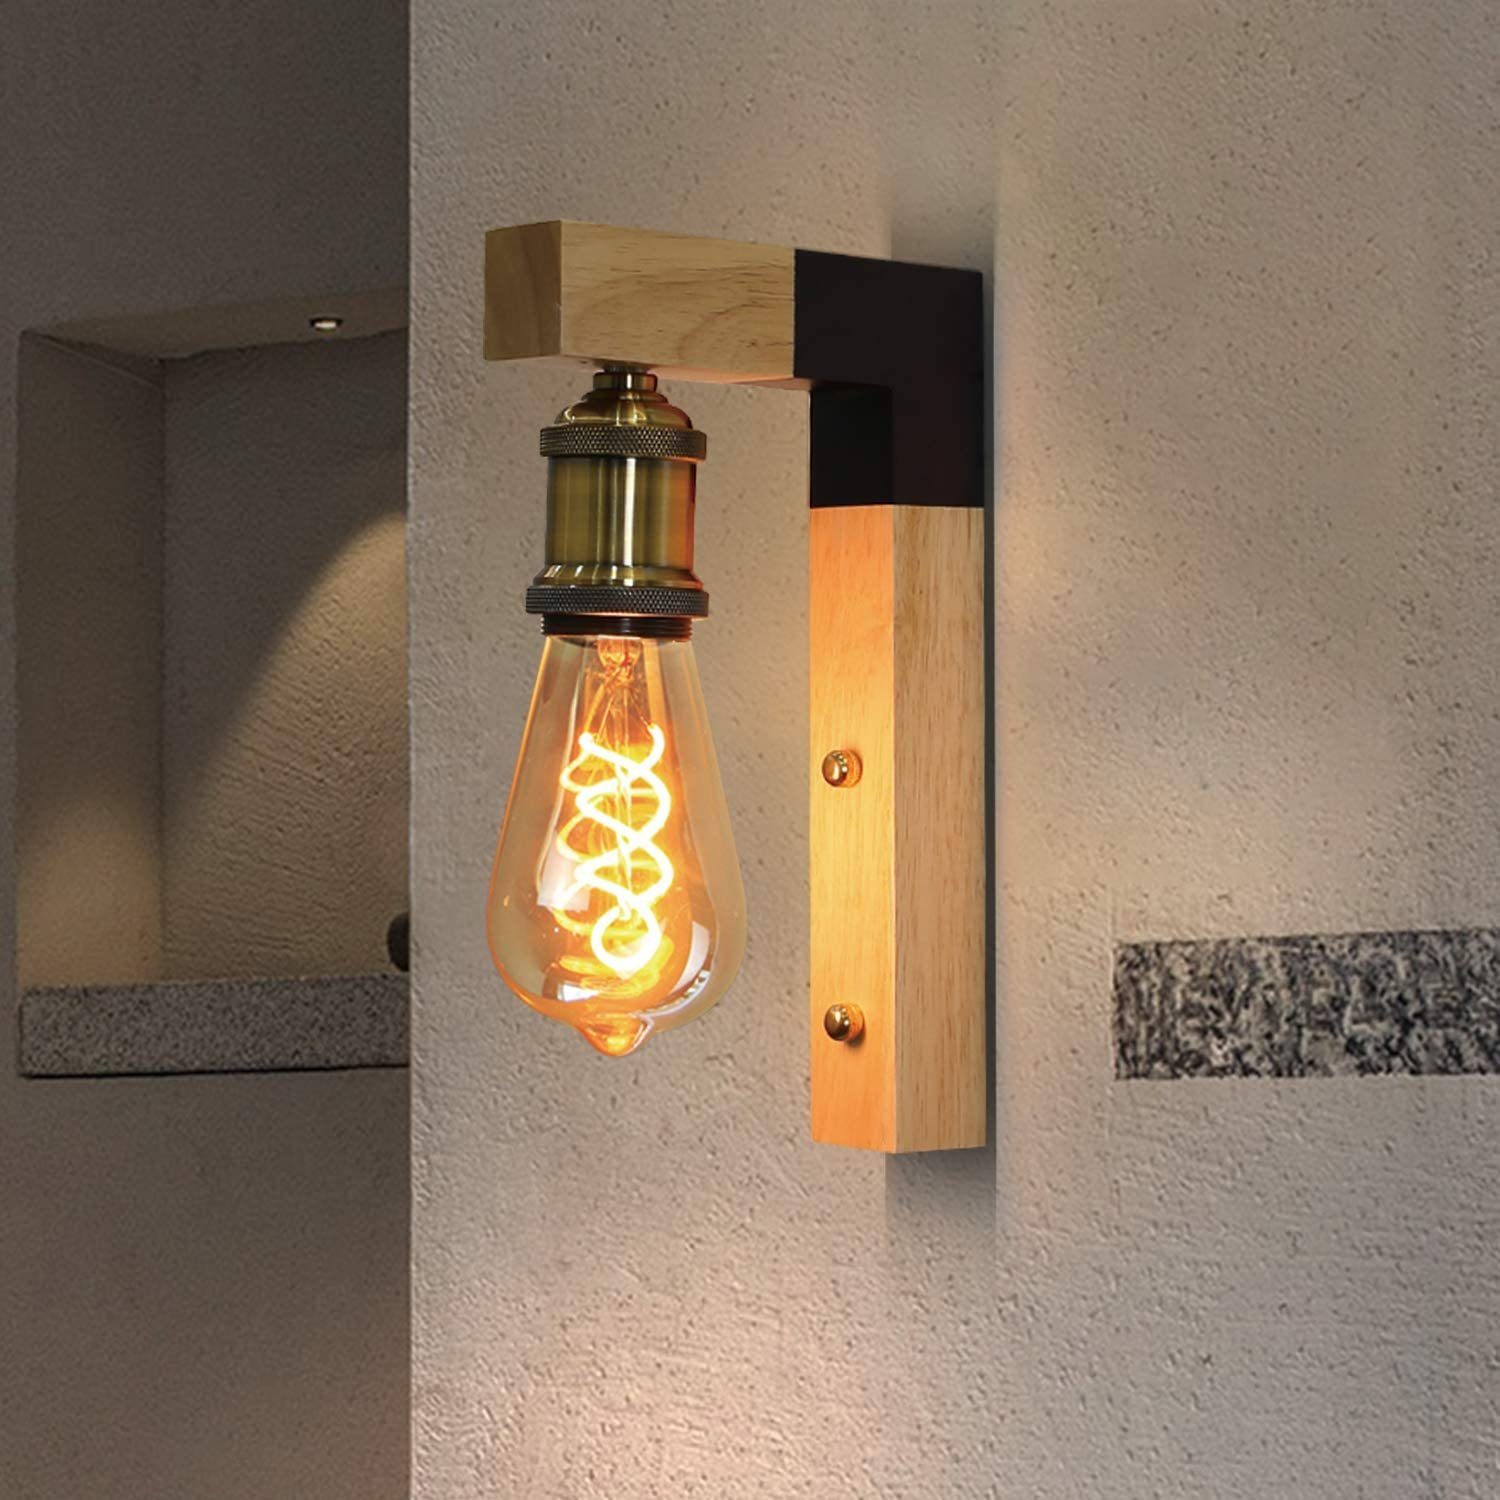 Wandleuchte Retro Vintage Holz Wandlampe Industrielampe innen Laterne Licht E27 